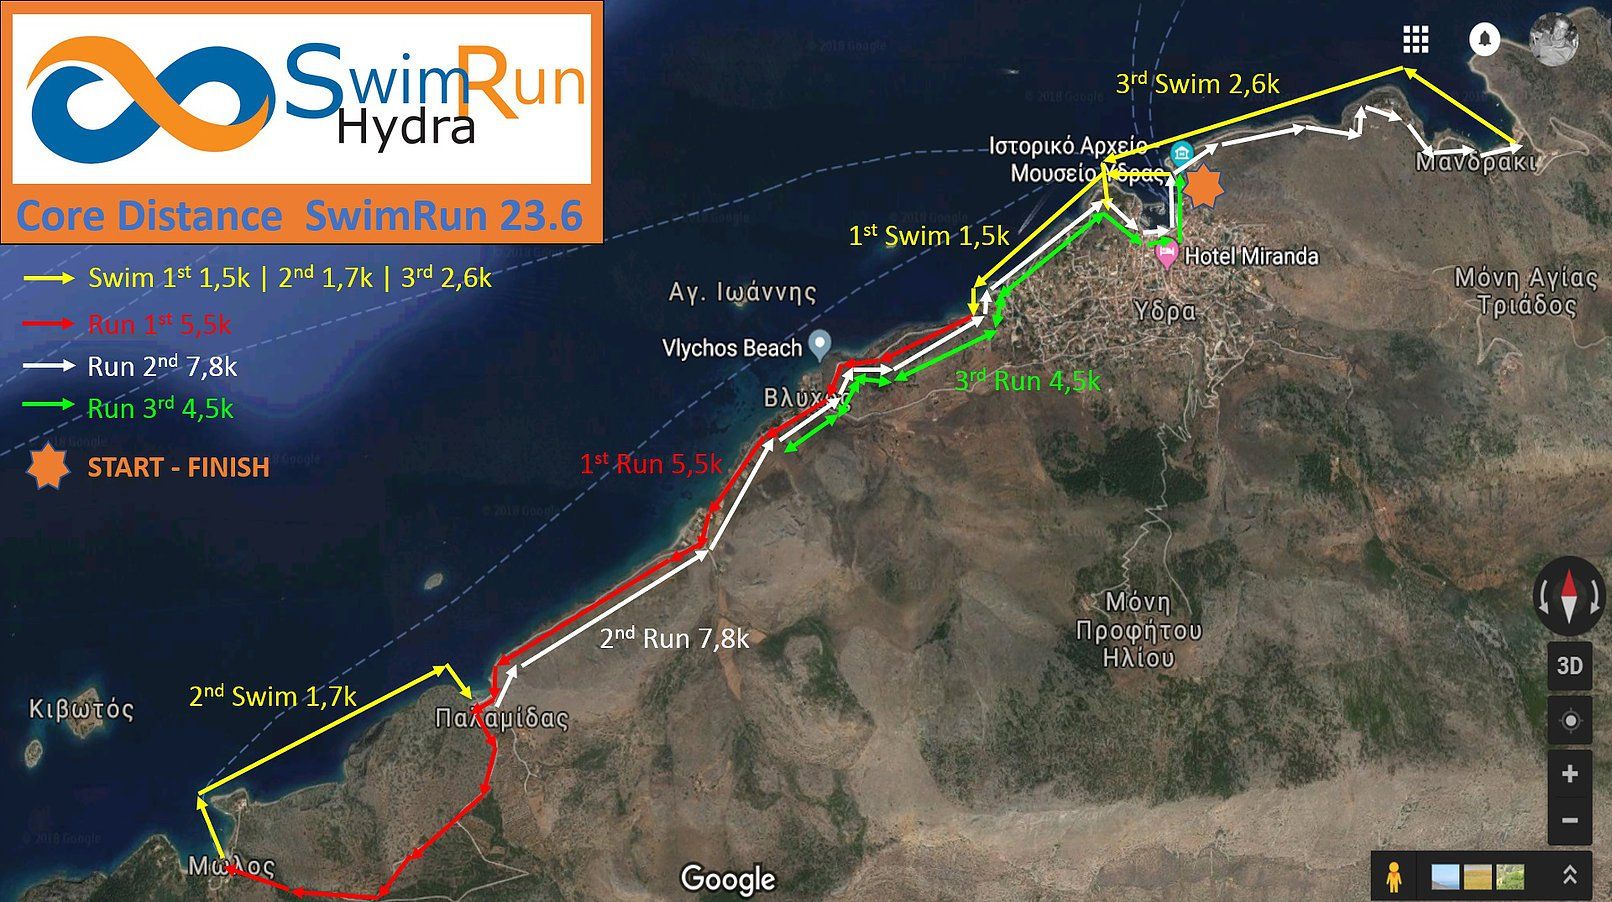 Core distance race route for the SwimRun Hydra event 2019